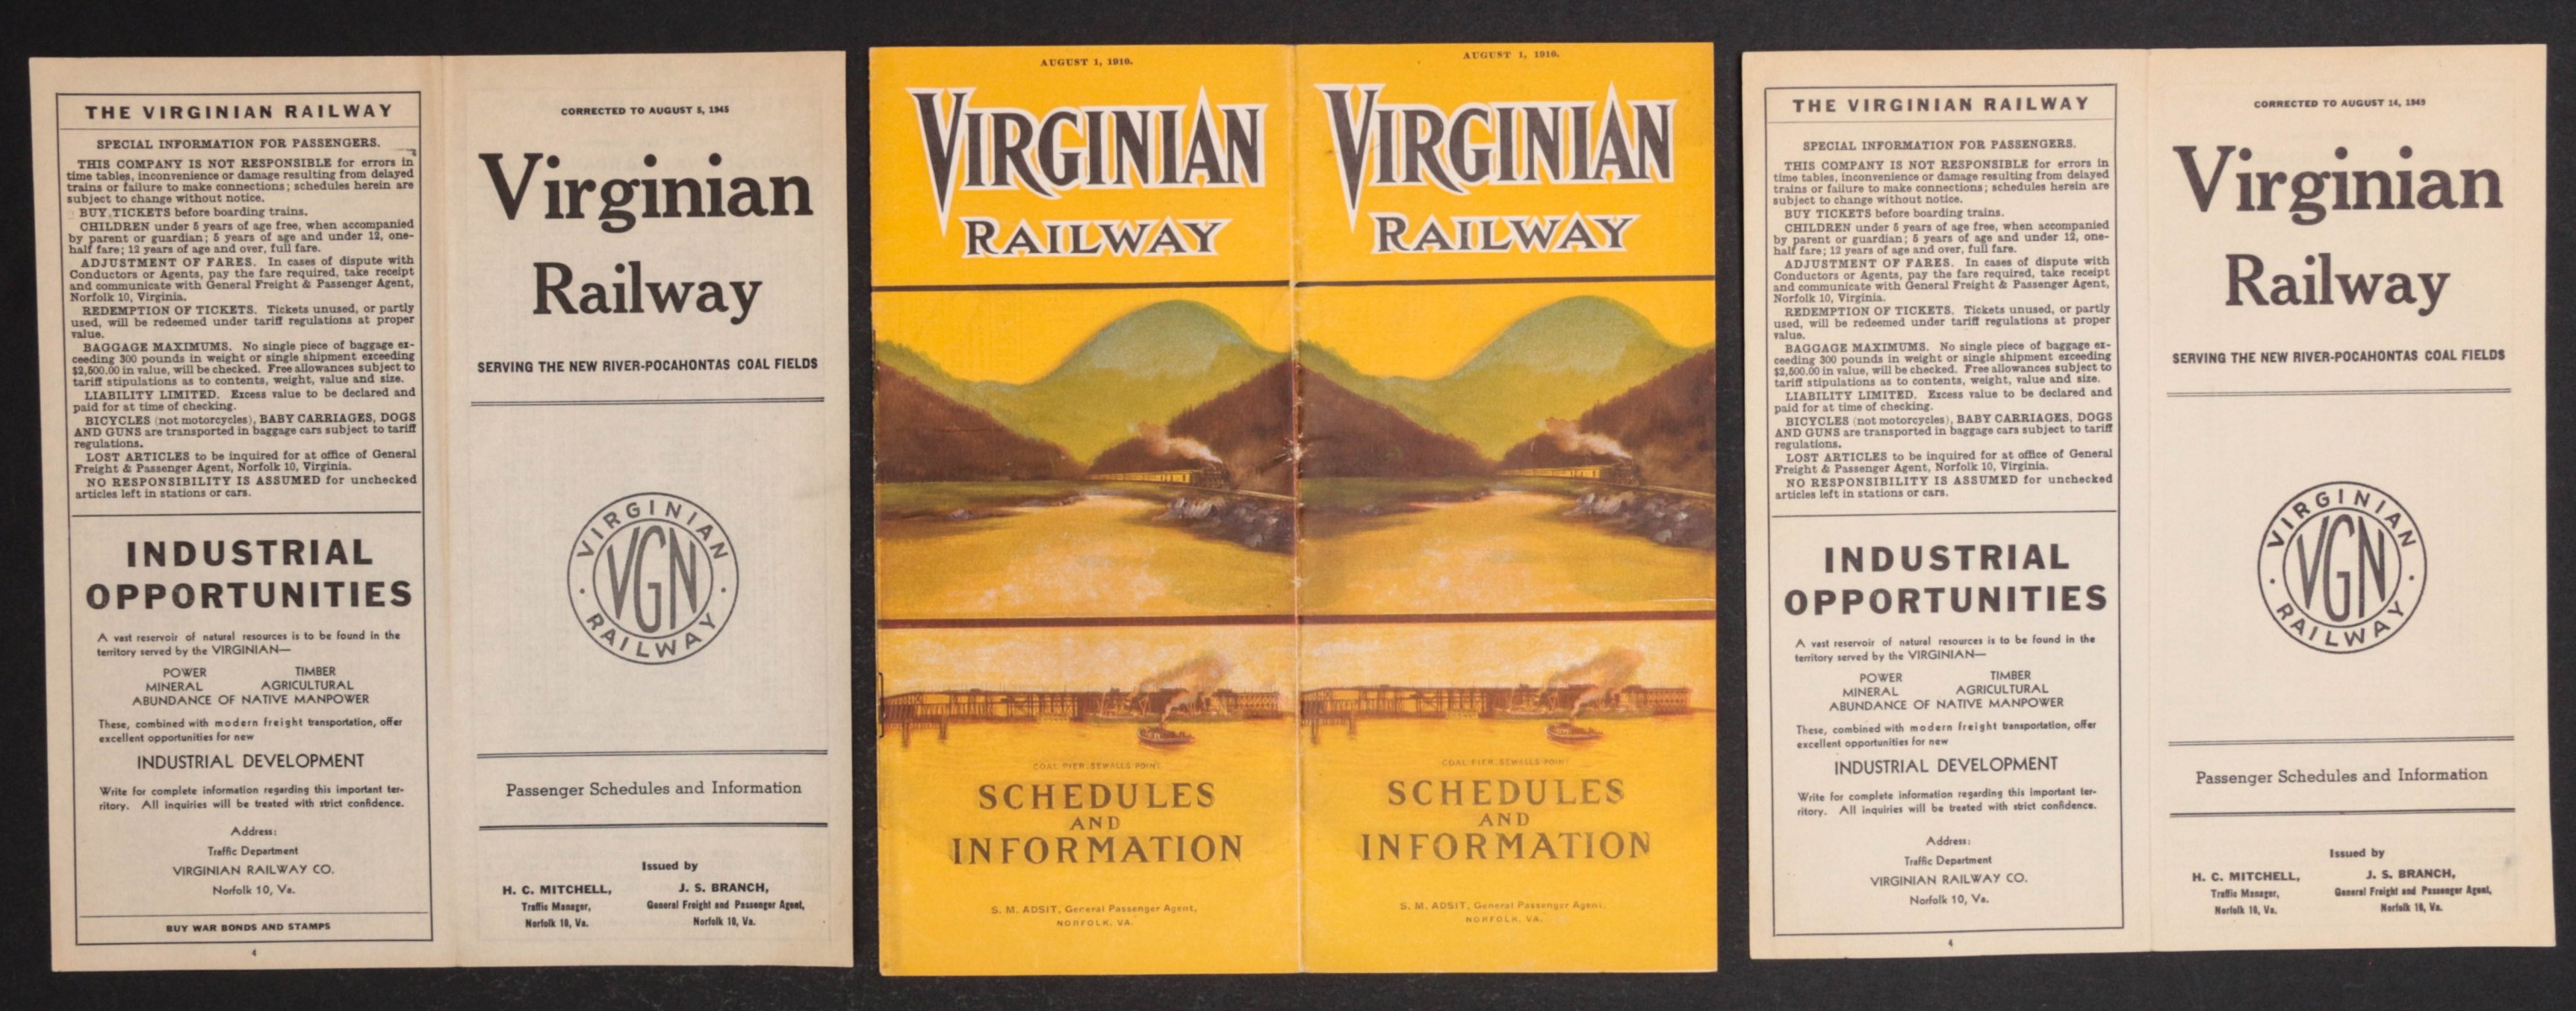 VIRGINIAN RAILWAY TIMETABLES FOR 1910, 1945 & 1949